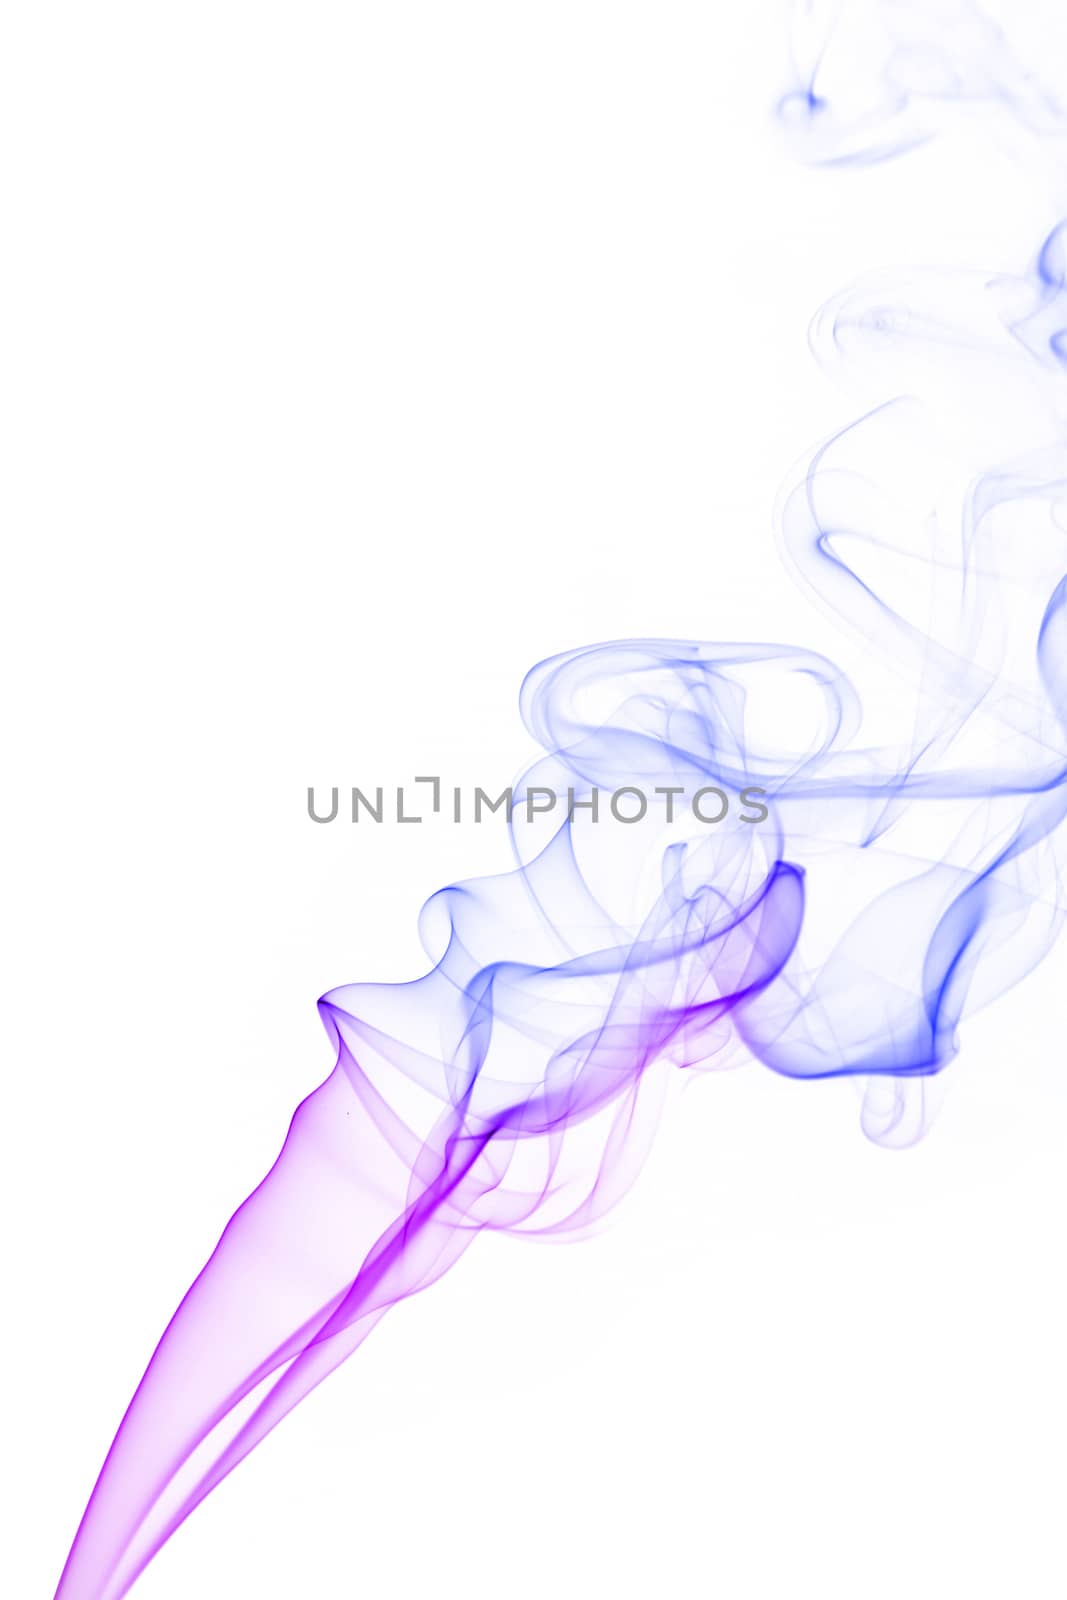 Colourful smoke on white background